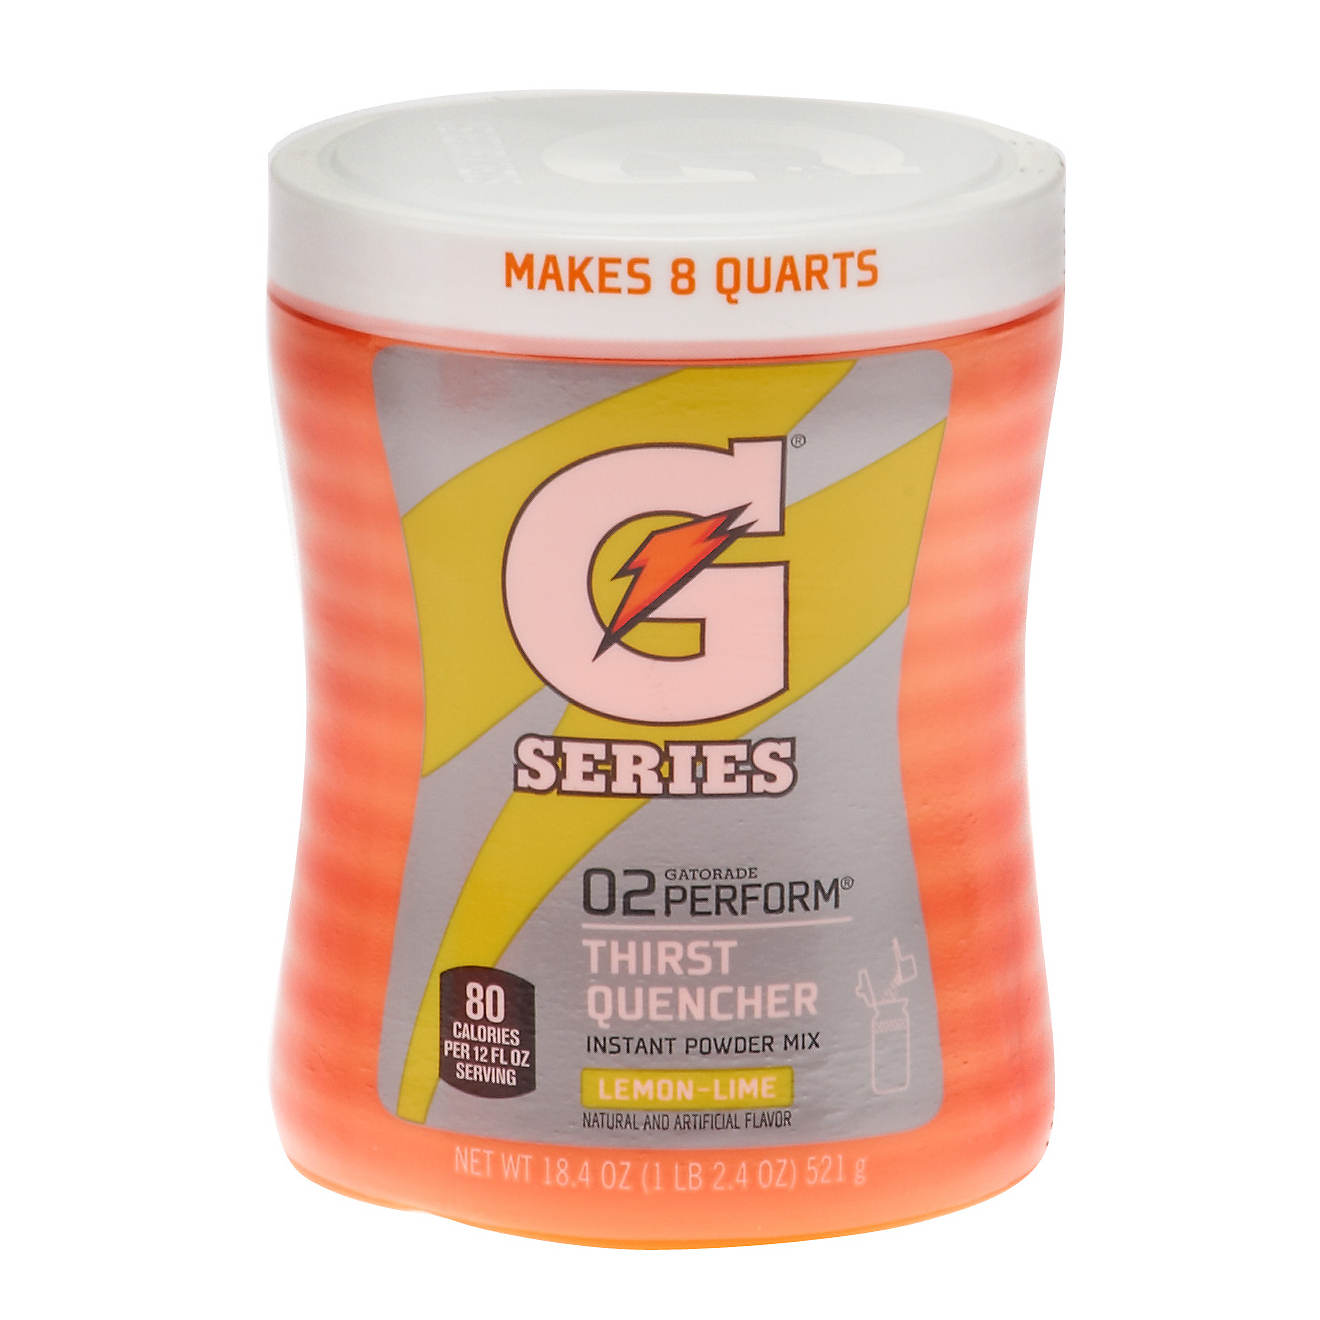 Gatorade G Series 02 Perform Thirst Quencher Instant Powder Mix                                                                  - view number 1